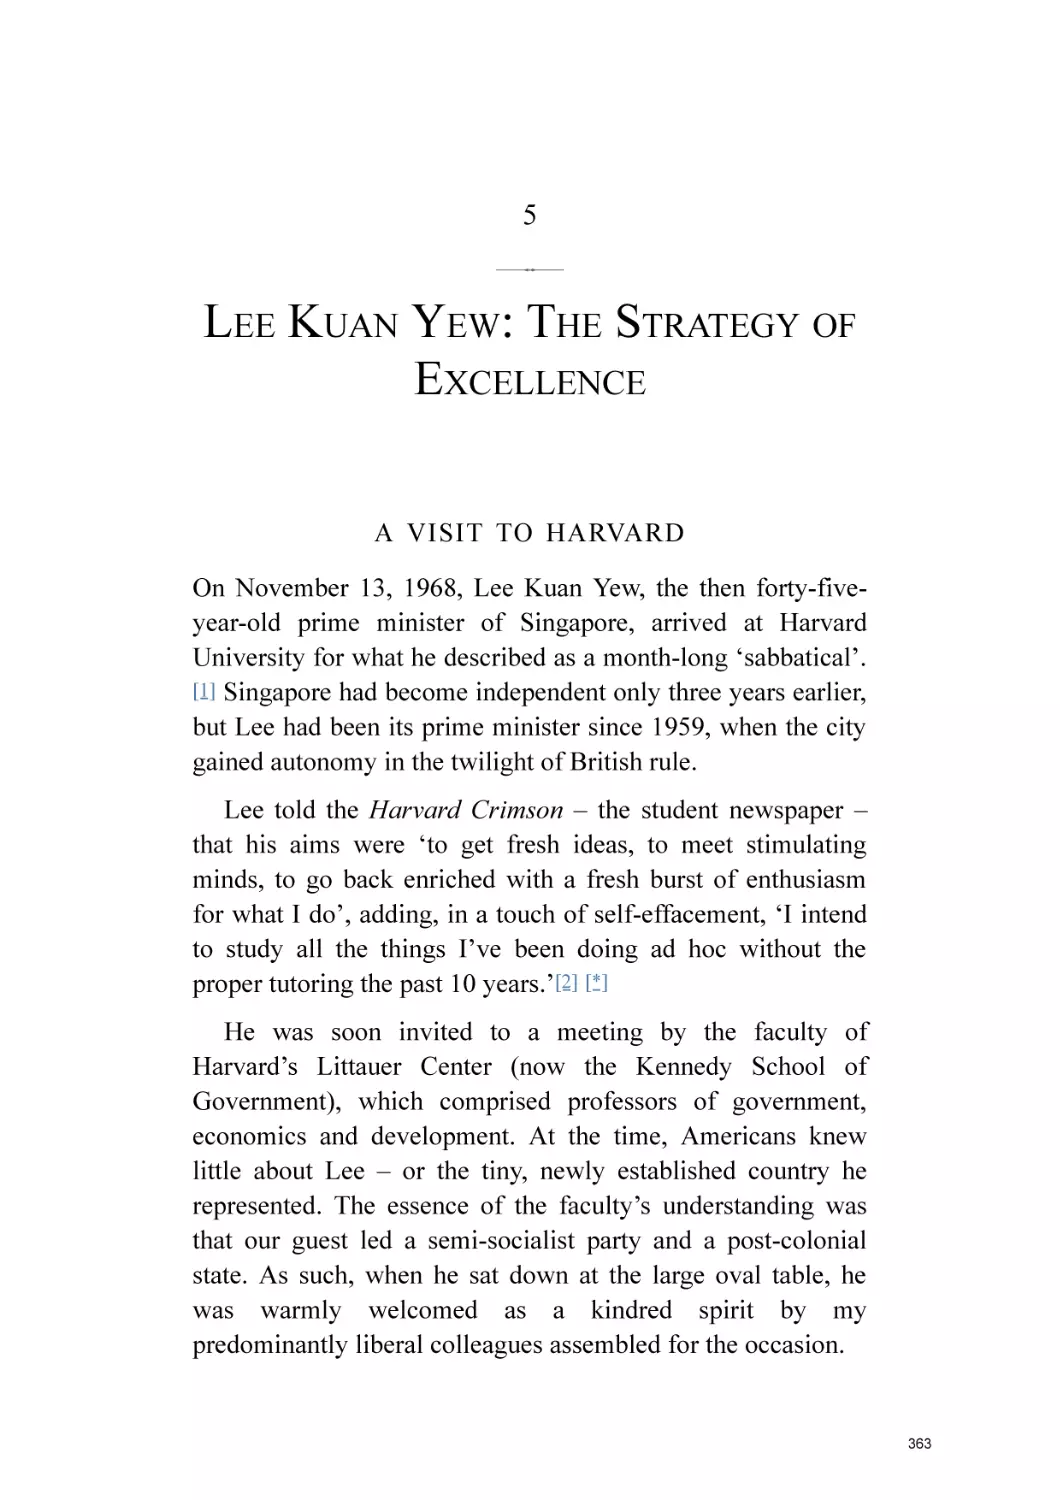 5. Lee Kuan Yew
A Visit to Harvard